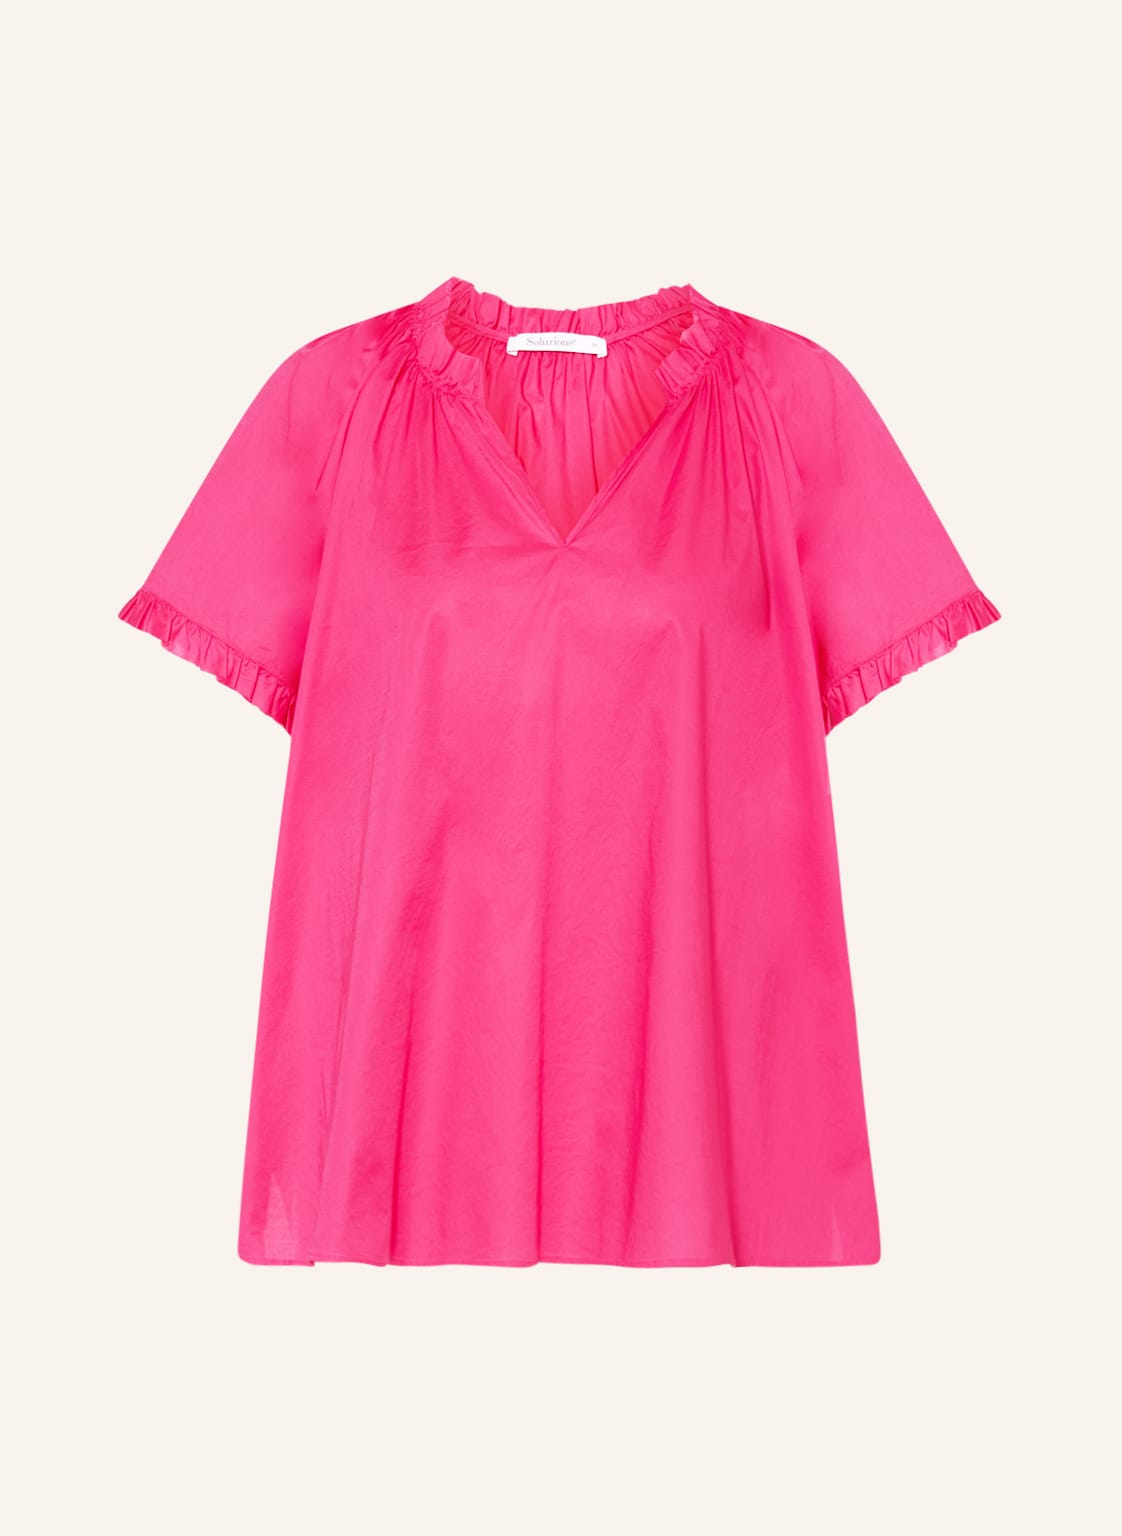 Image of Soluzione Blusenshirt pink